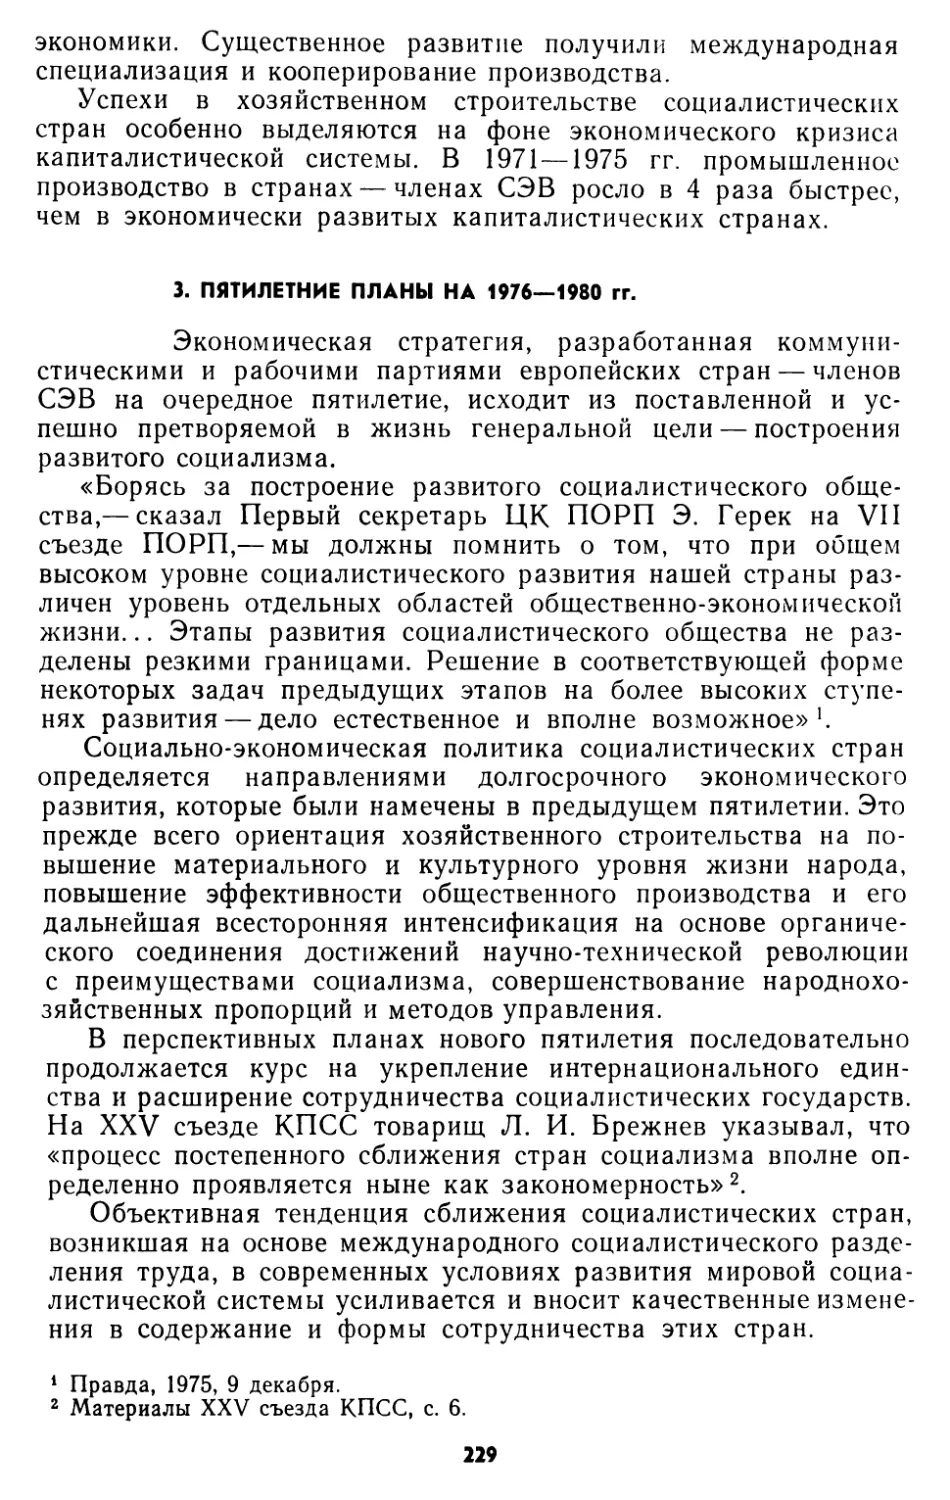 3. Пятилетние планы на 1976—1980 гг.